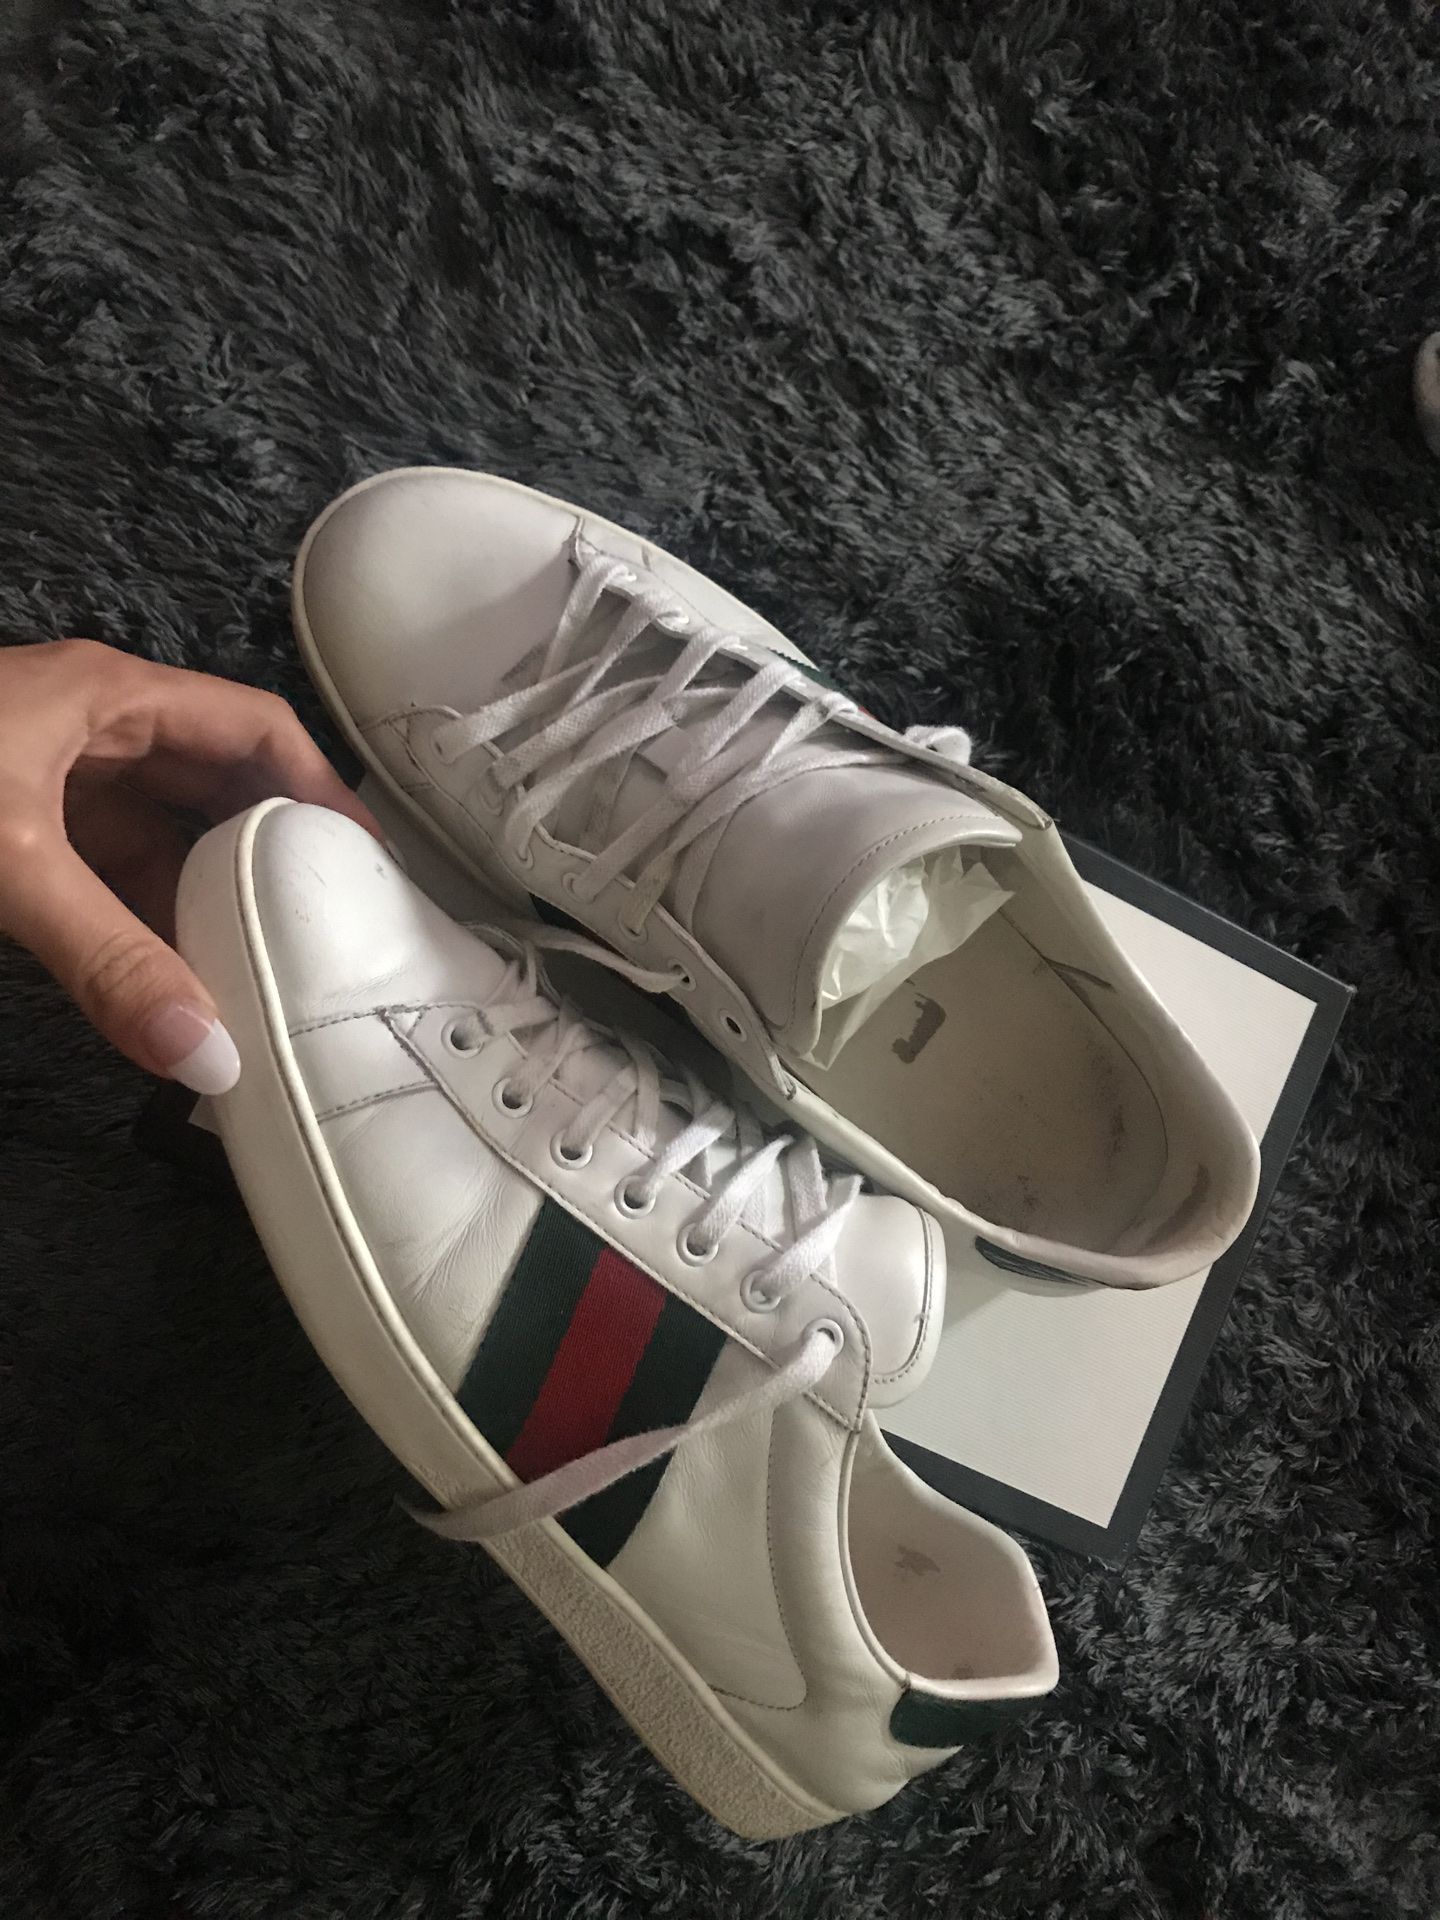 Men’s authentic Gucci ace sneakers size 11